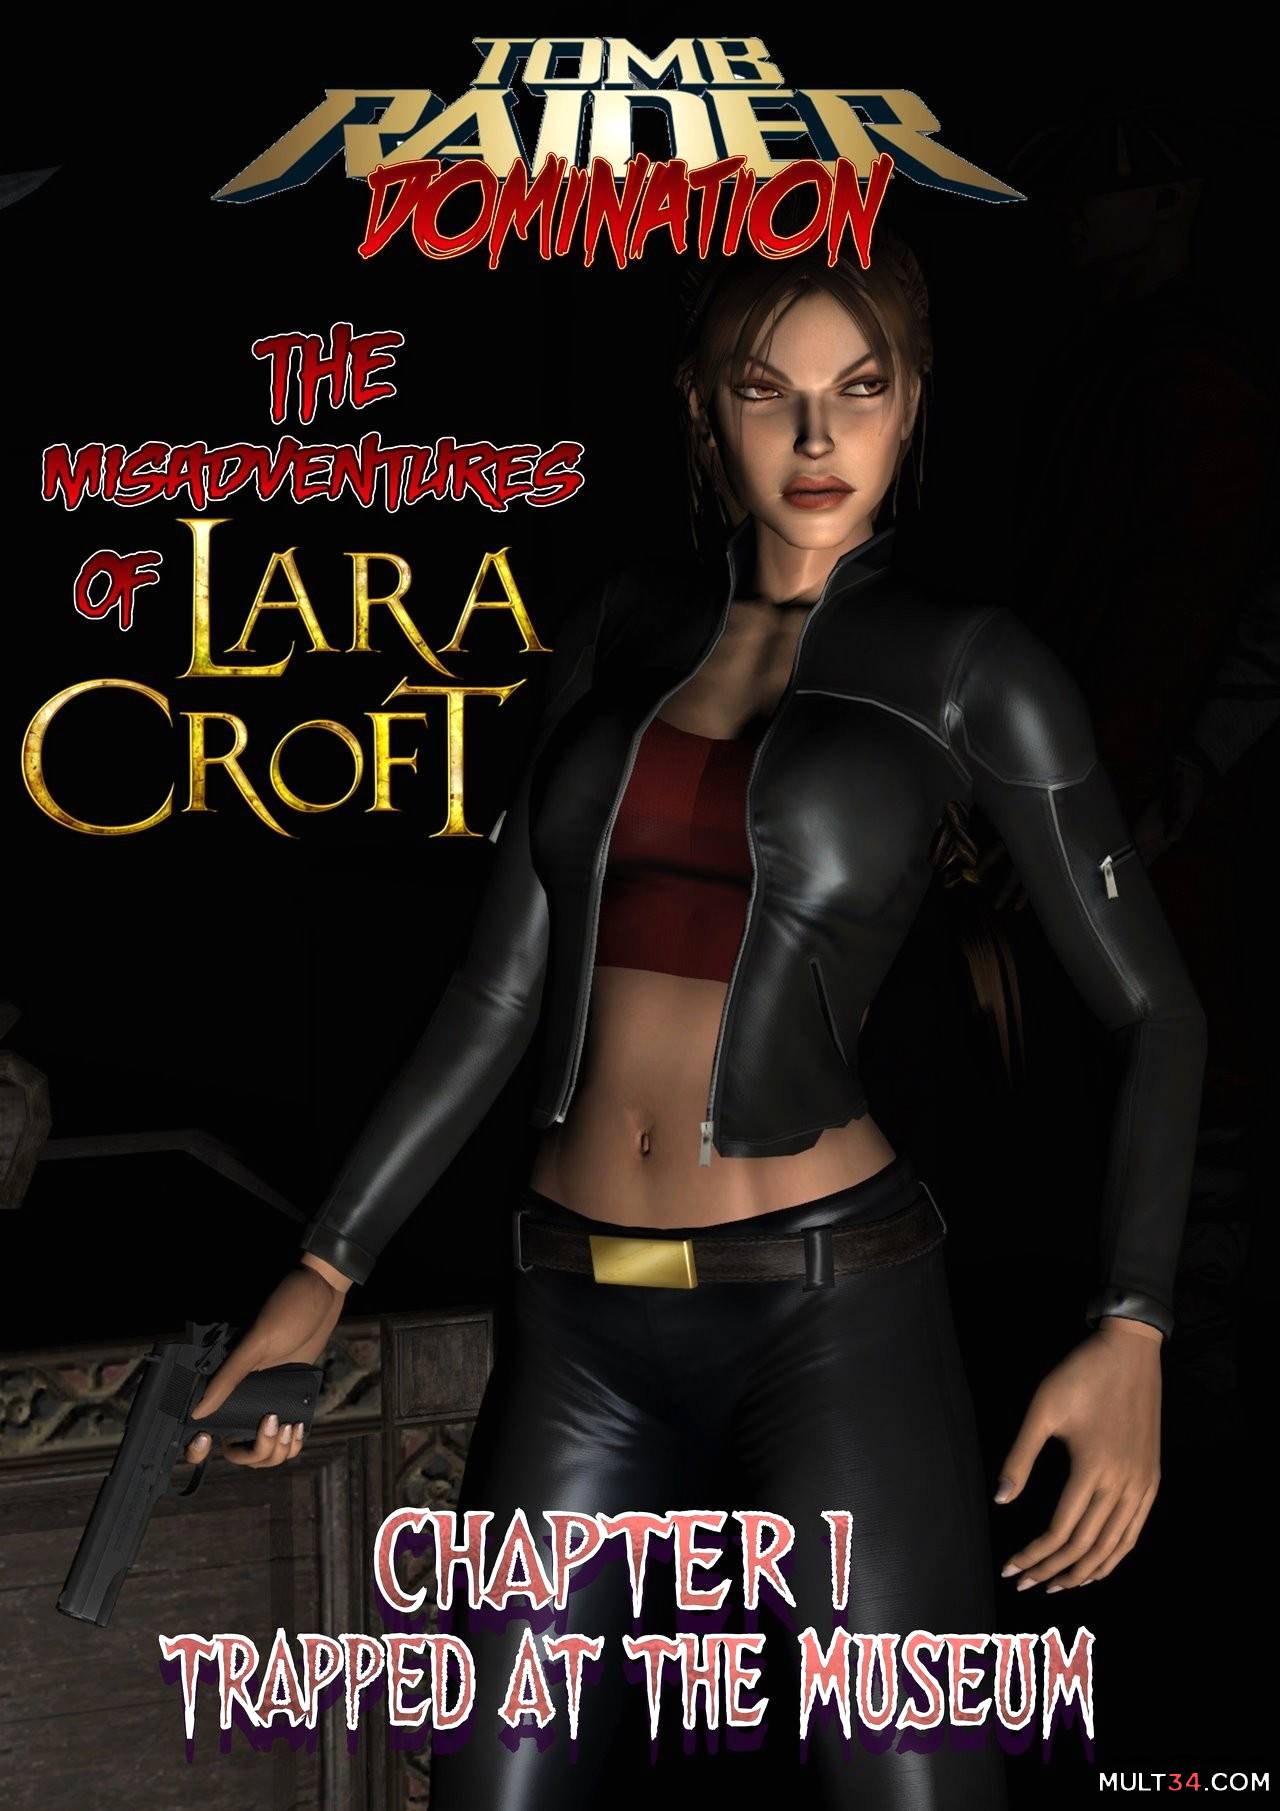 Tomb Raider Domination -The Misadventures of Lara Croft - chapter 1 page 1